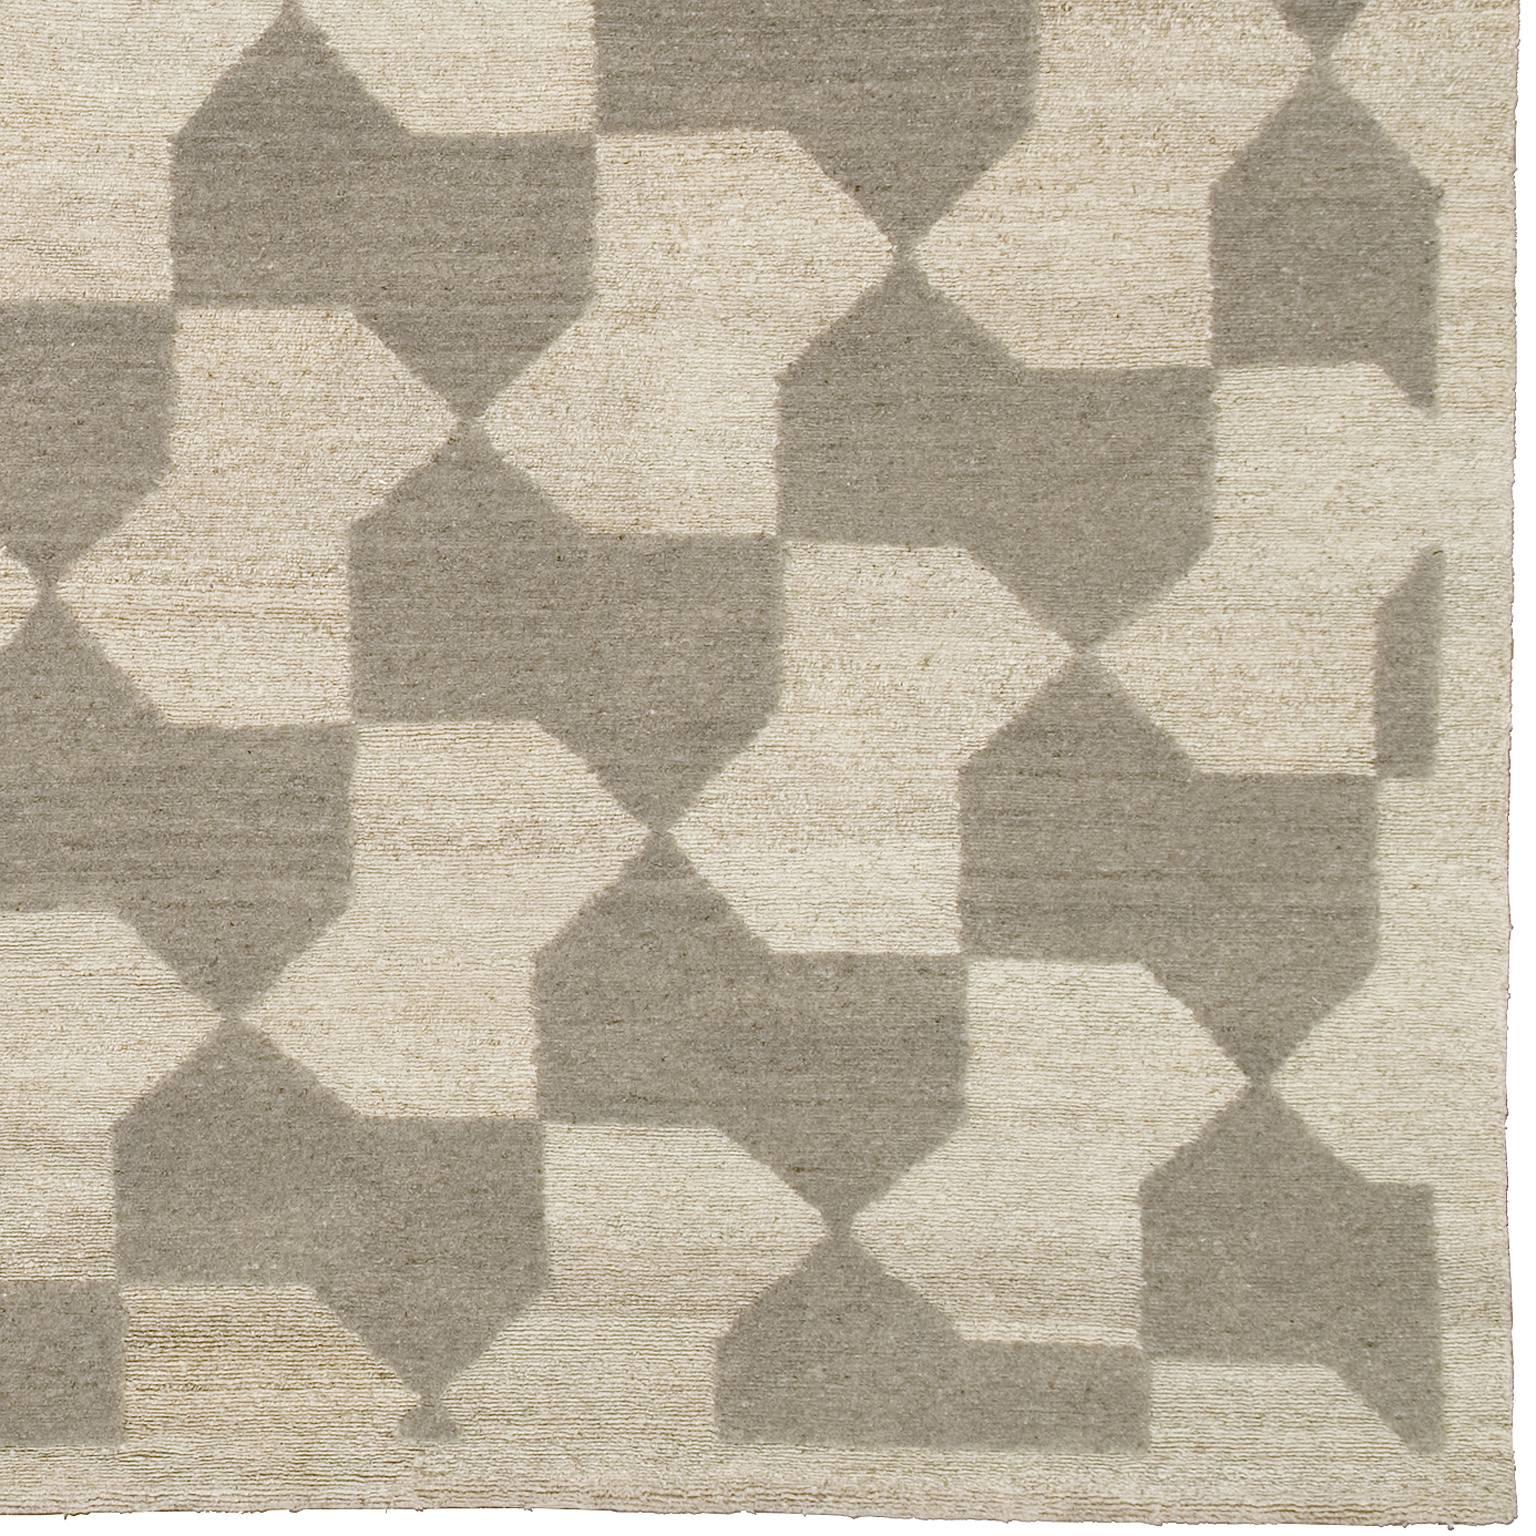 Contemporary 'Bow Tie' Carpet
Two levels, cut pile and loop. Salu wool (cut pile) + Nettle (loop).
